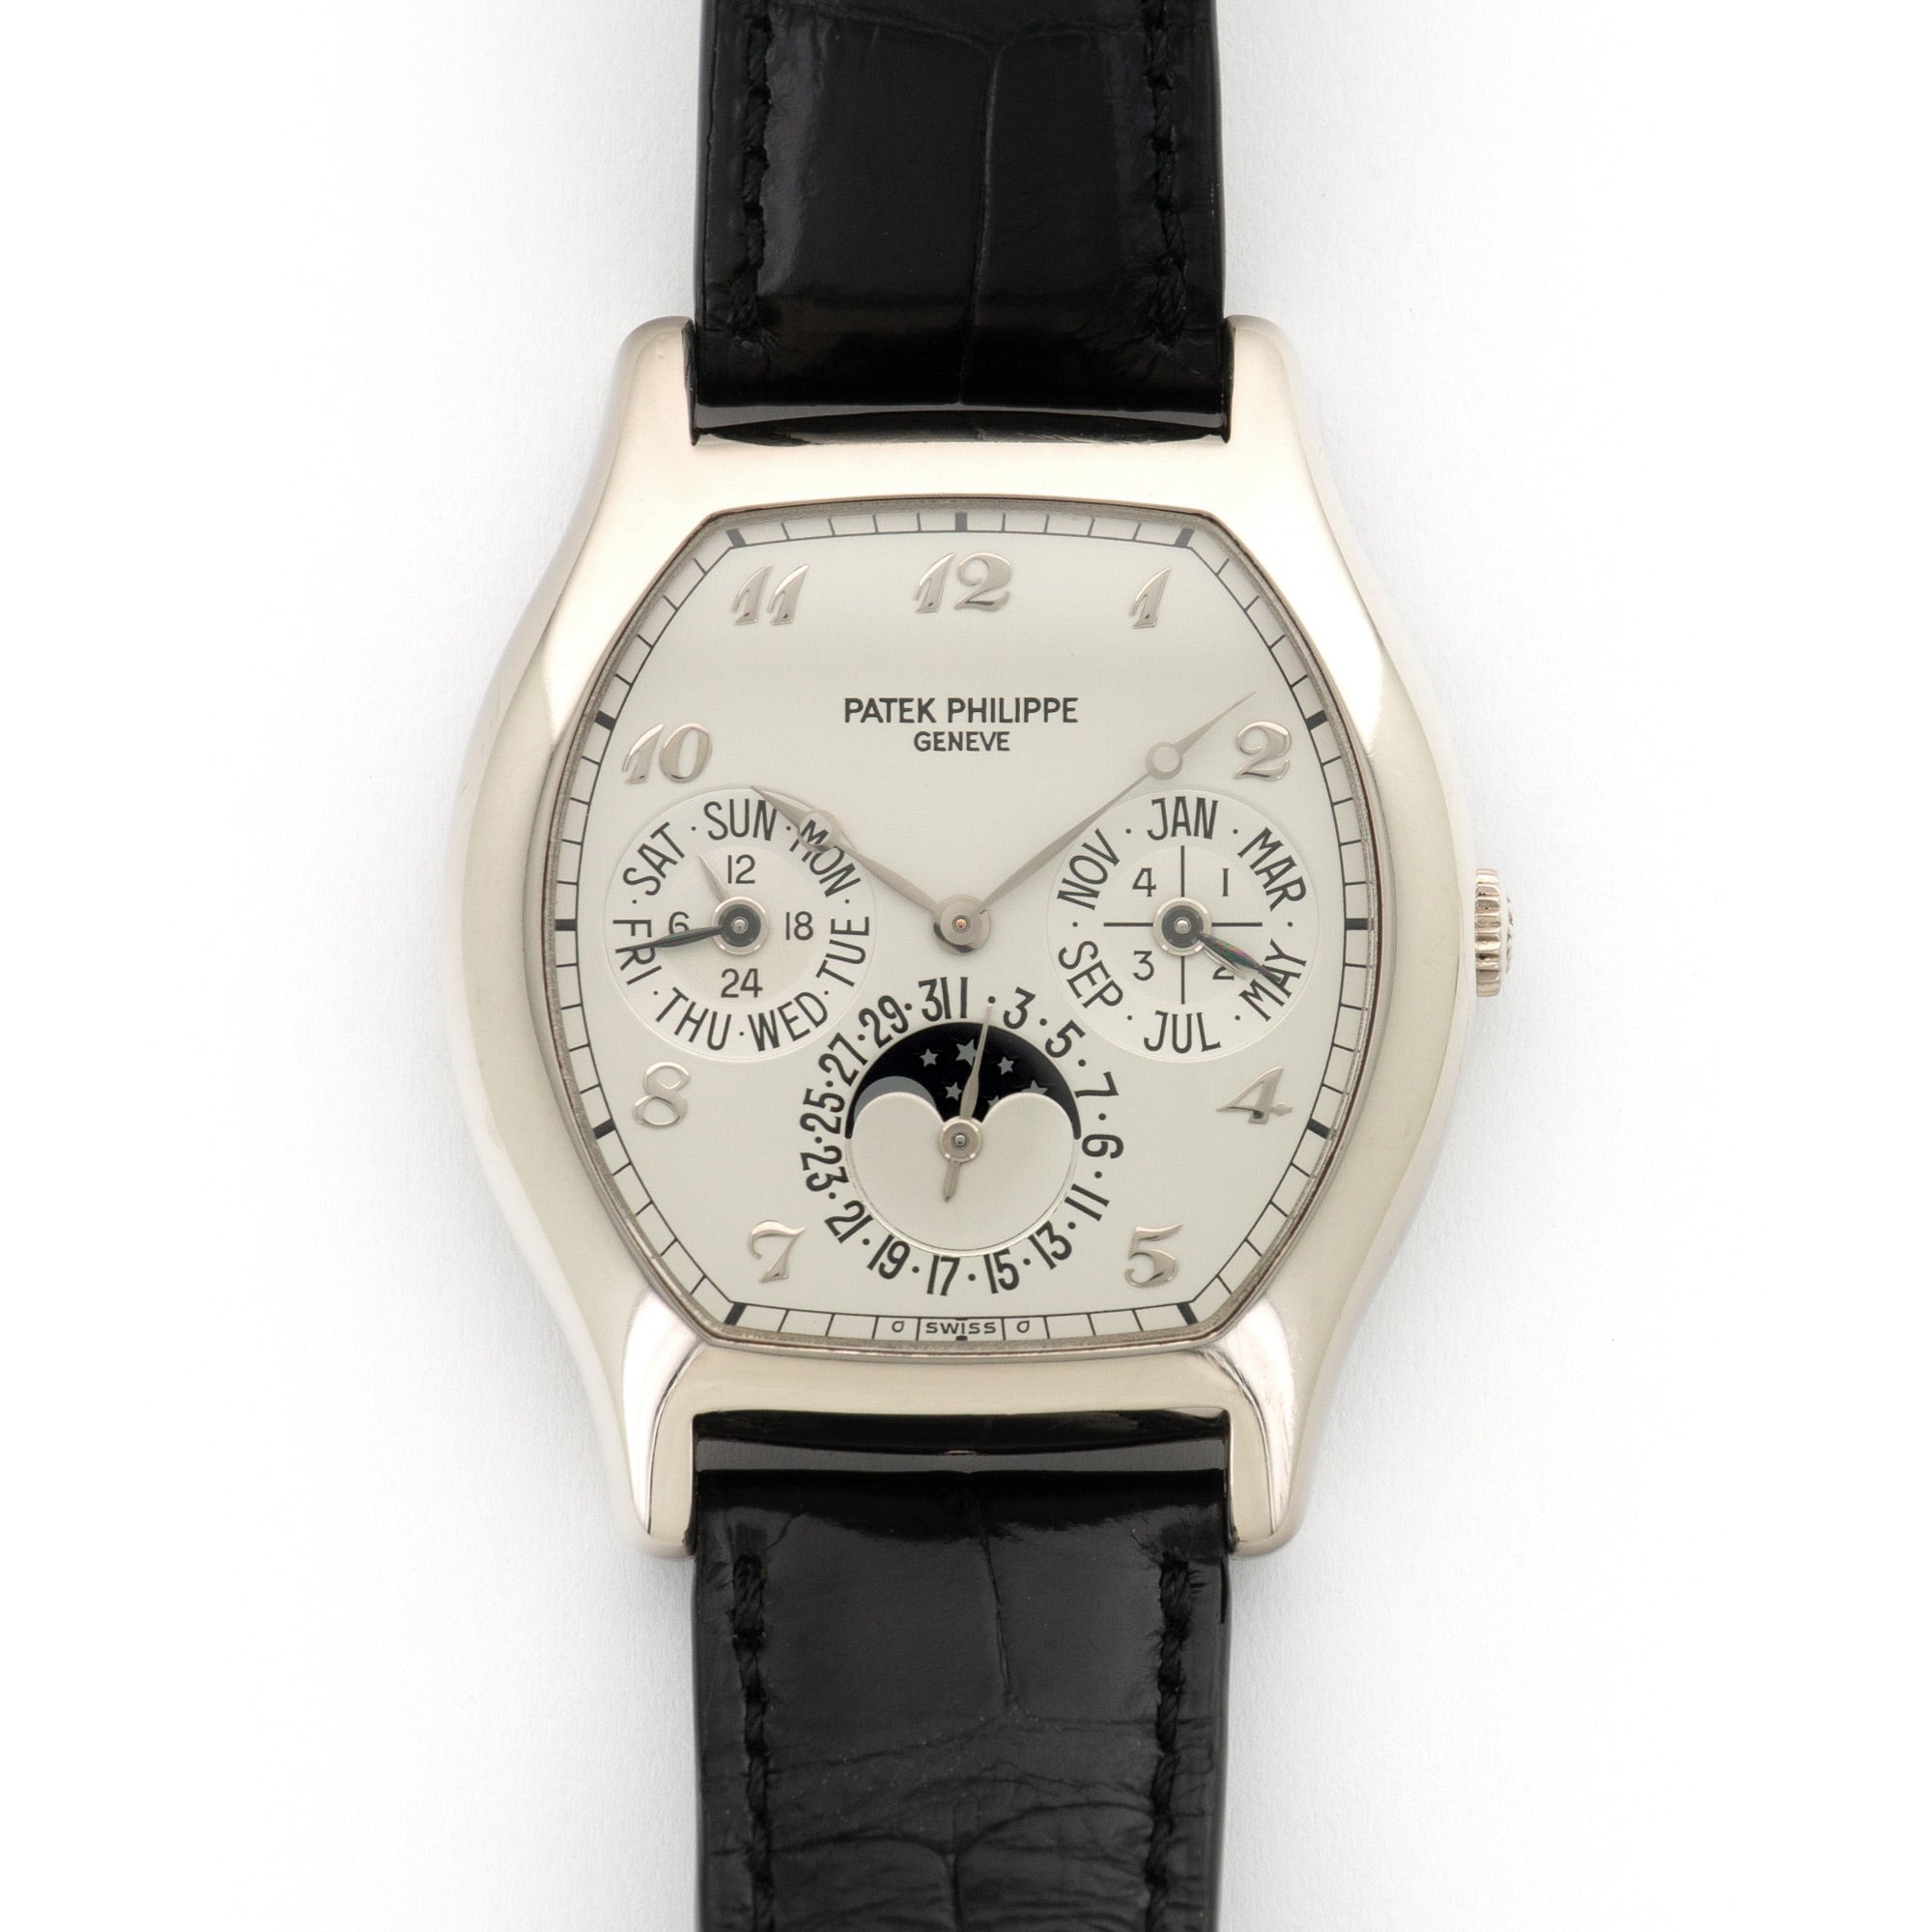 Patek Philippe - Patek Philippe White Gold Perpetual Calendar Watch Ref. 5040 - The Keystone Watches